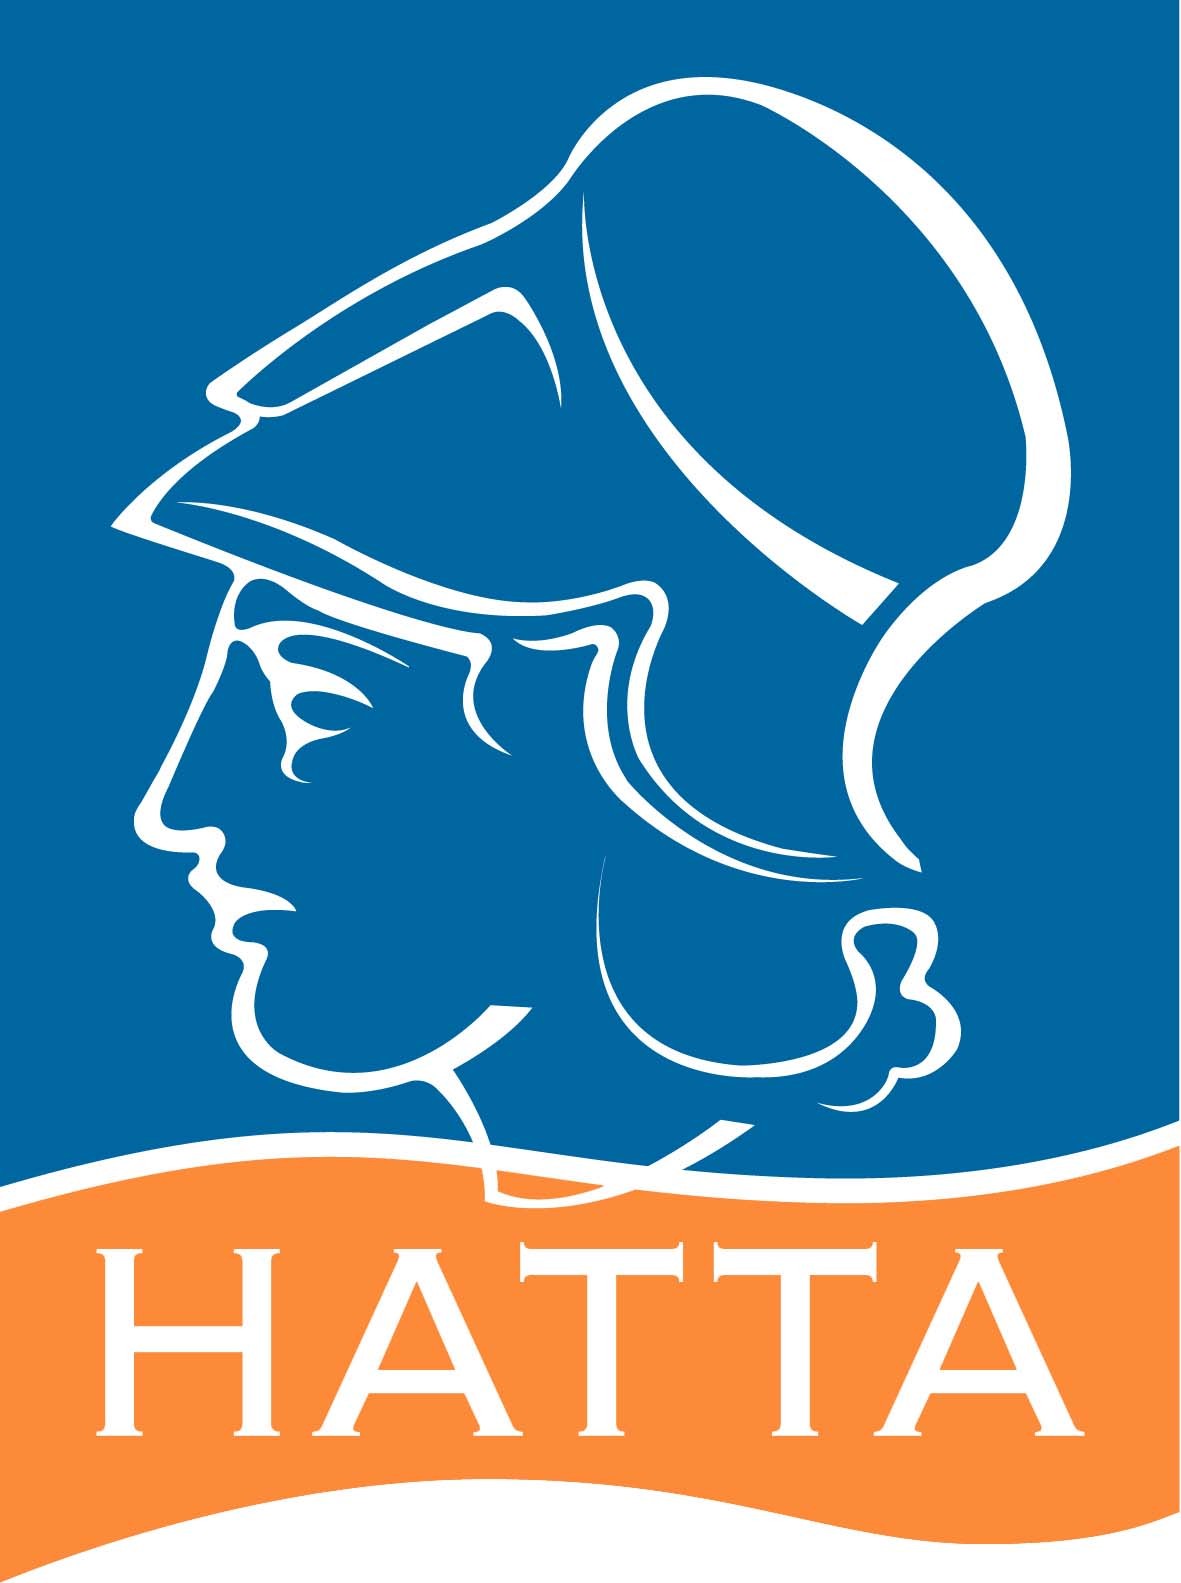 HATTA, Hellenic  Association of Tourist and  Travel AGencies